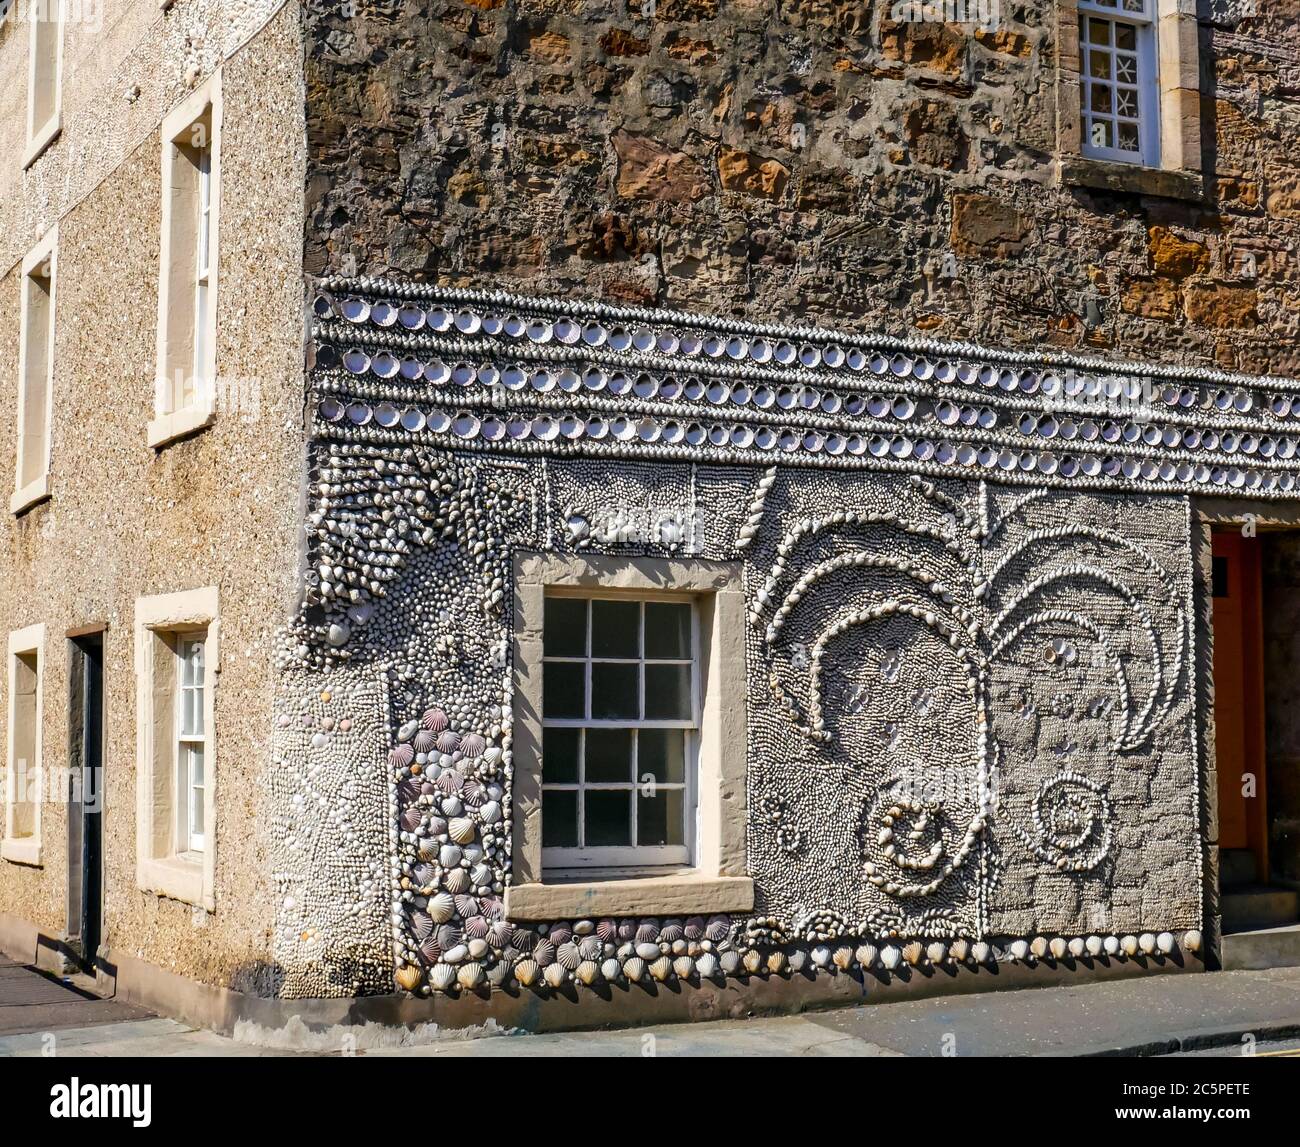 Inusual pared de casa peculiar cubierta de conchas de mar, Anstruther, Fife, Escocia, Reino Unido Foto de stock